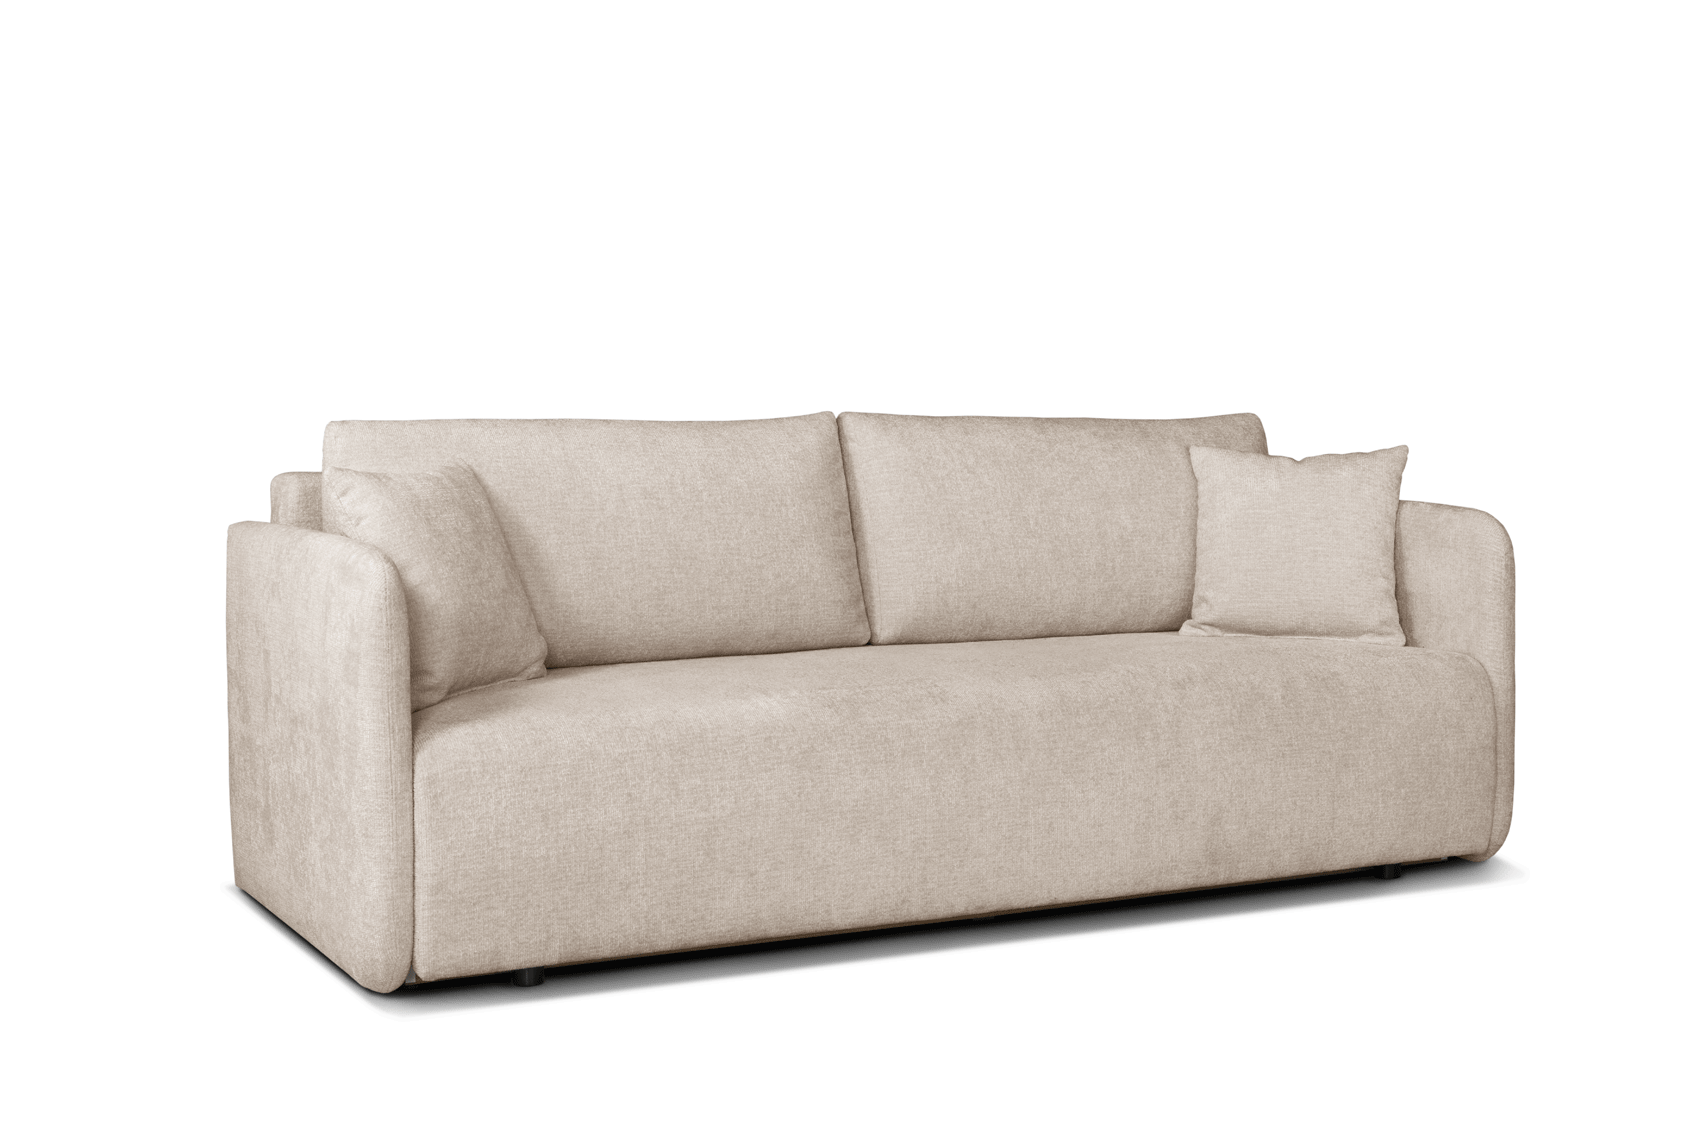 Brands Modern Living Room, Poland Allen Sofa-Bed